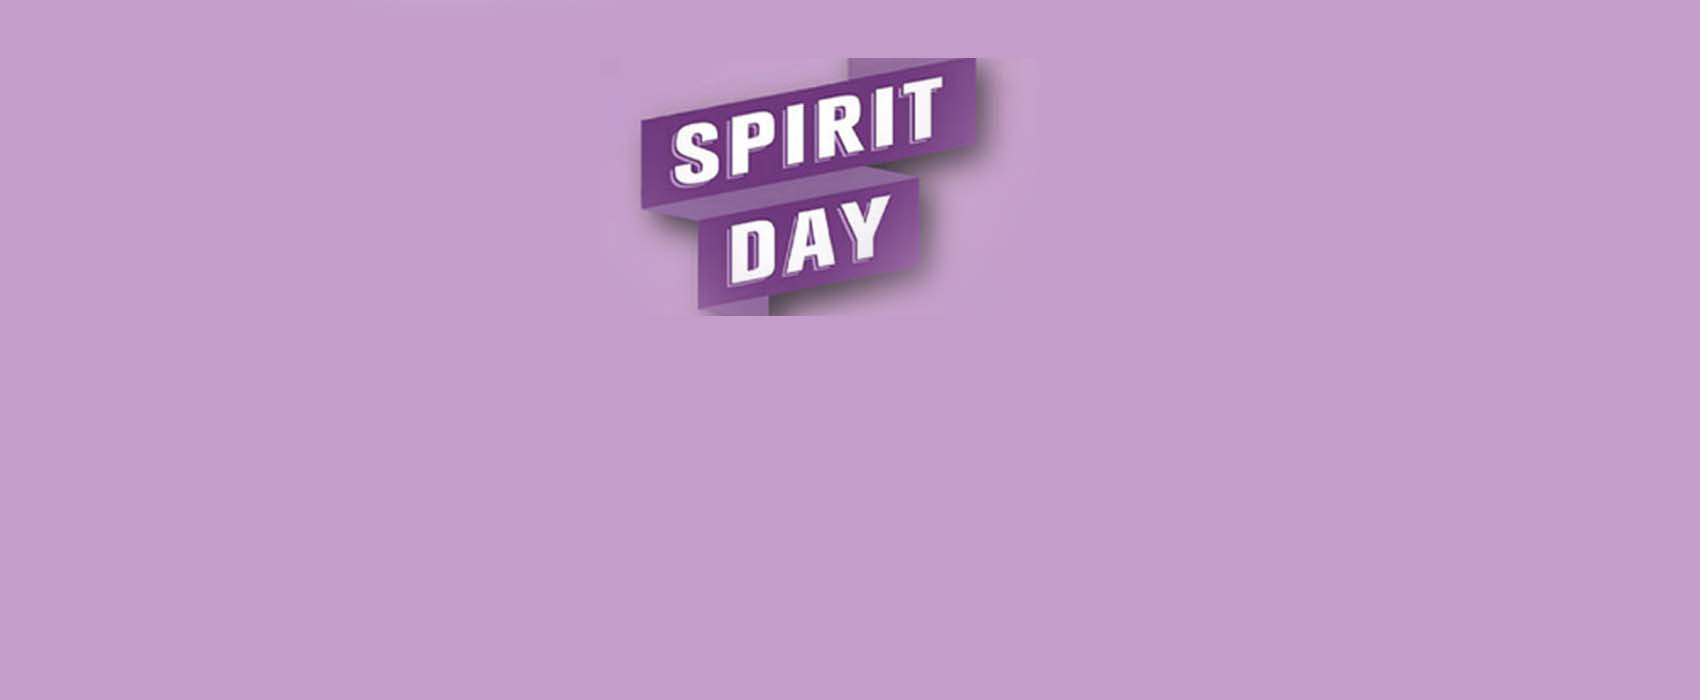 spirit day